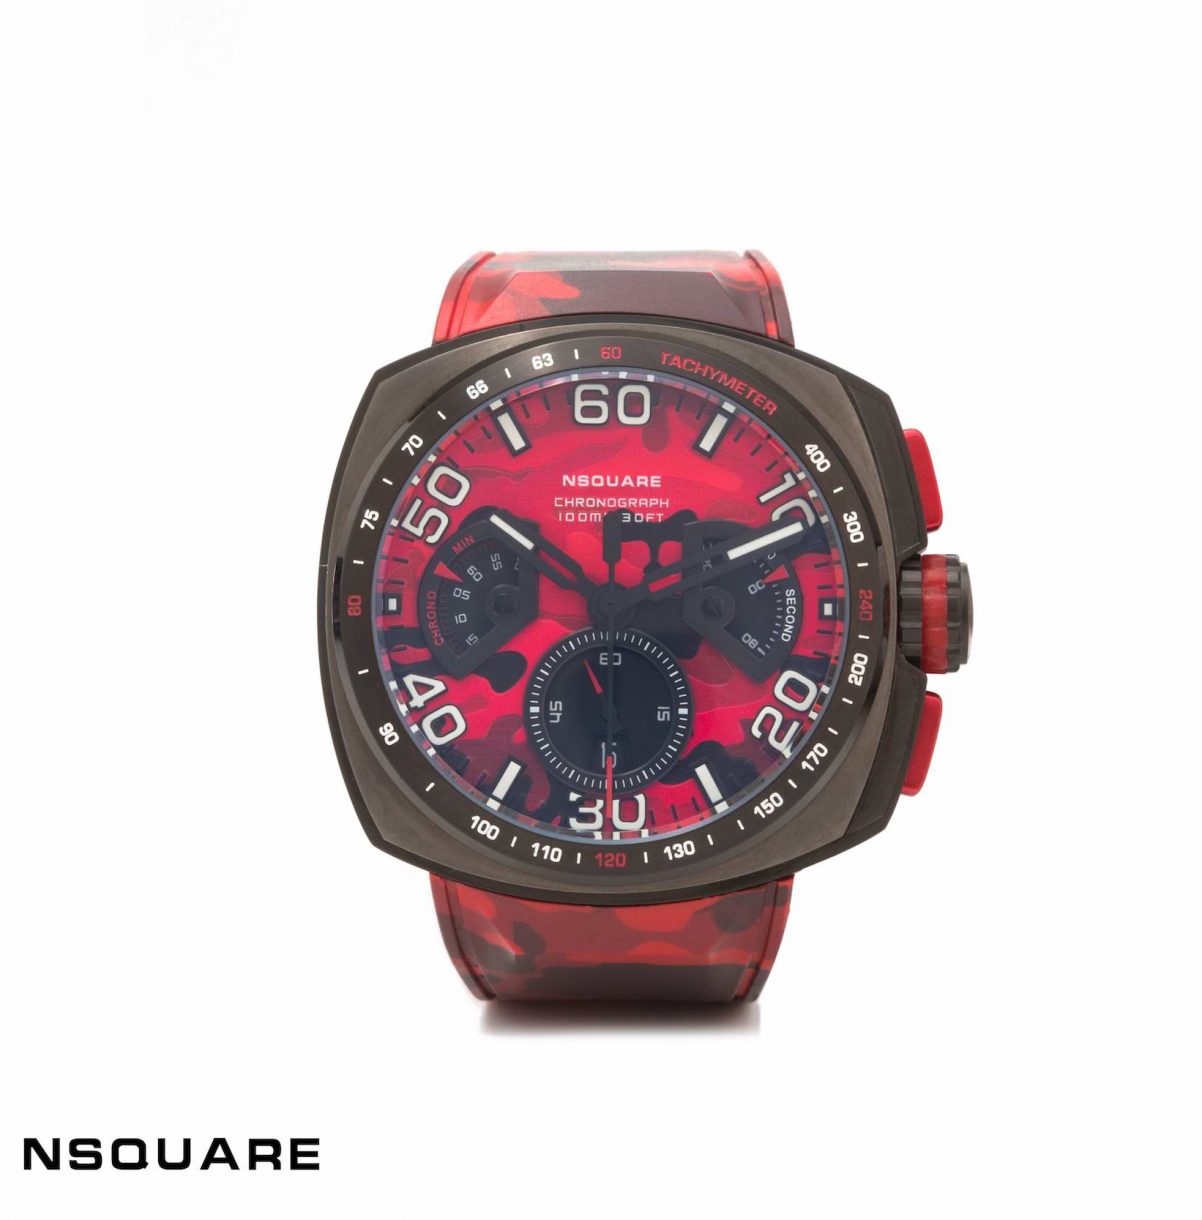 NSQUARE Nick Chrono Camo幻彩腕錶紅色迷彩款，參考售價 NTD13,700。